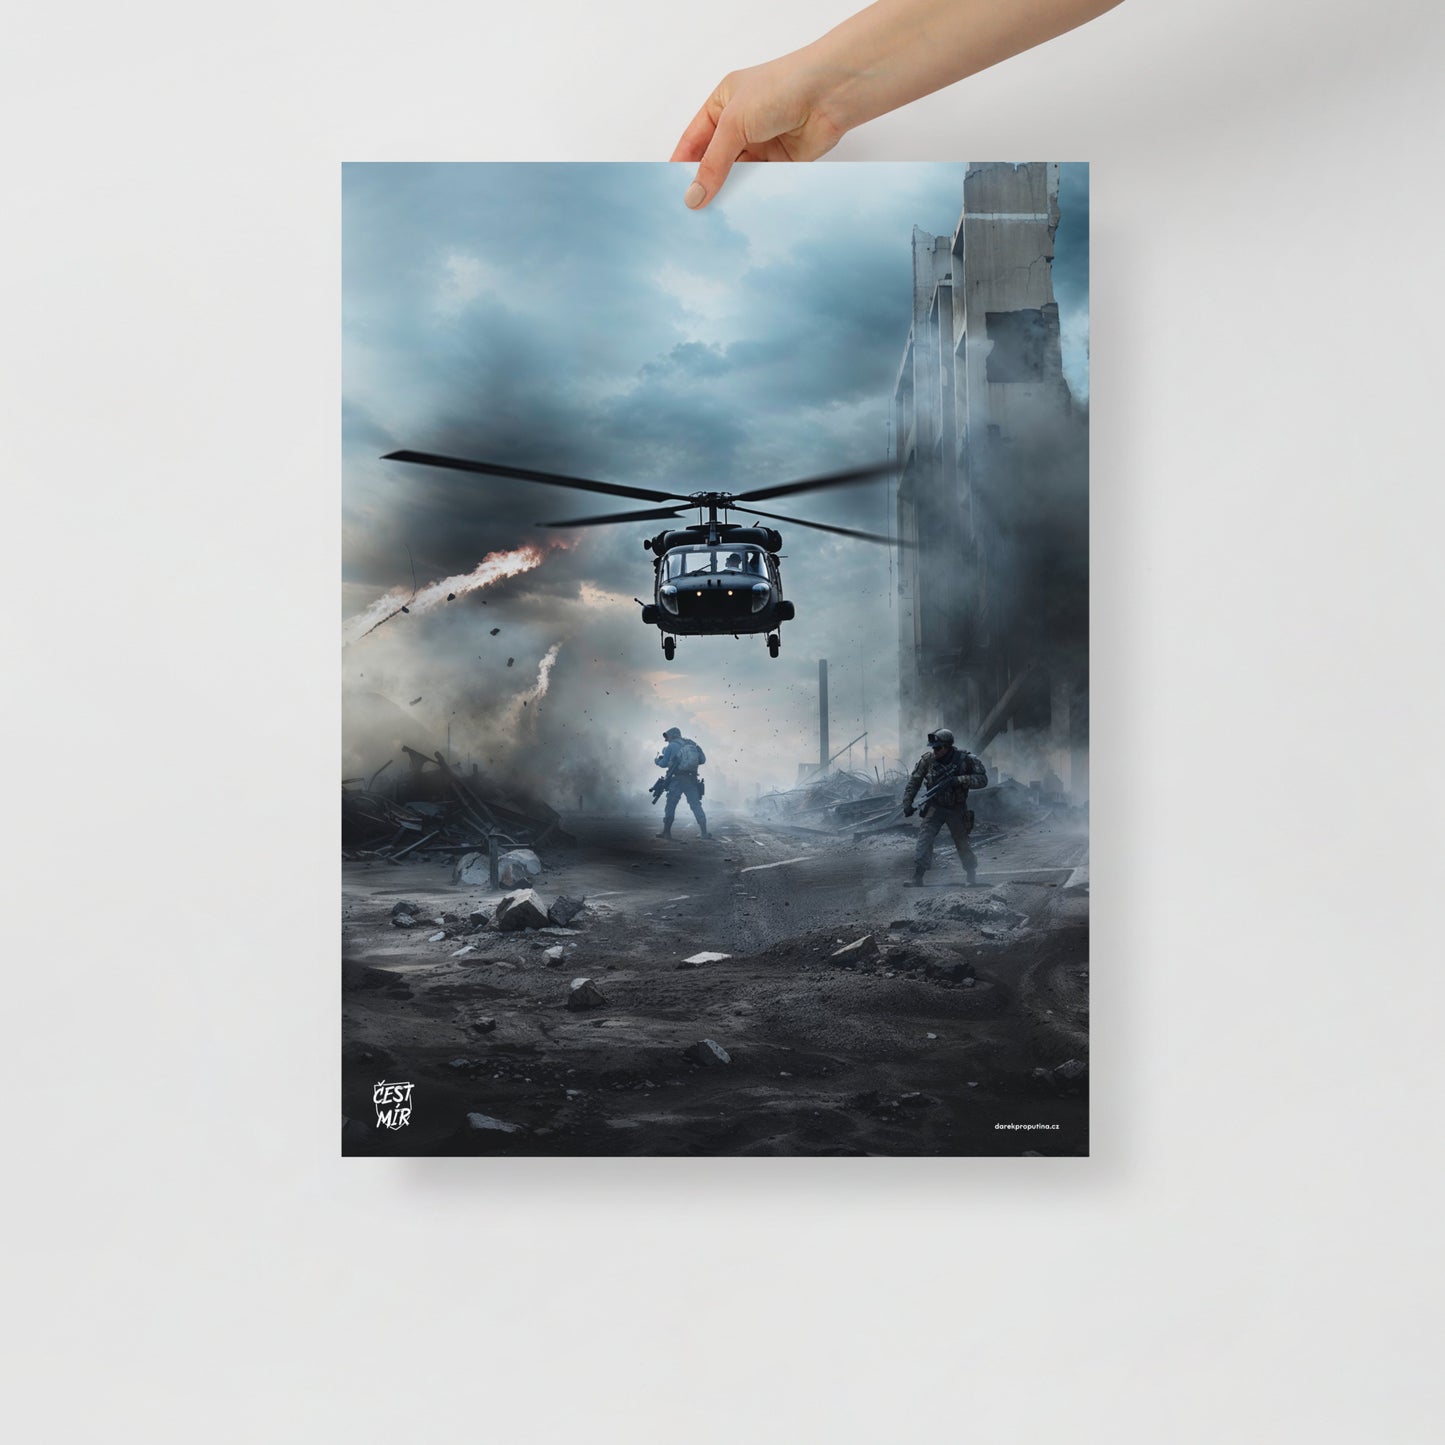 Airborne poster